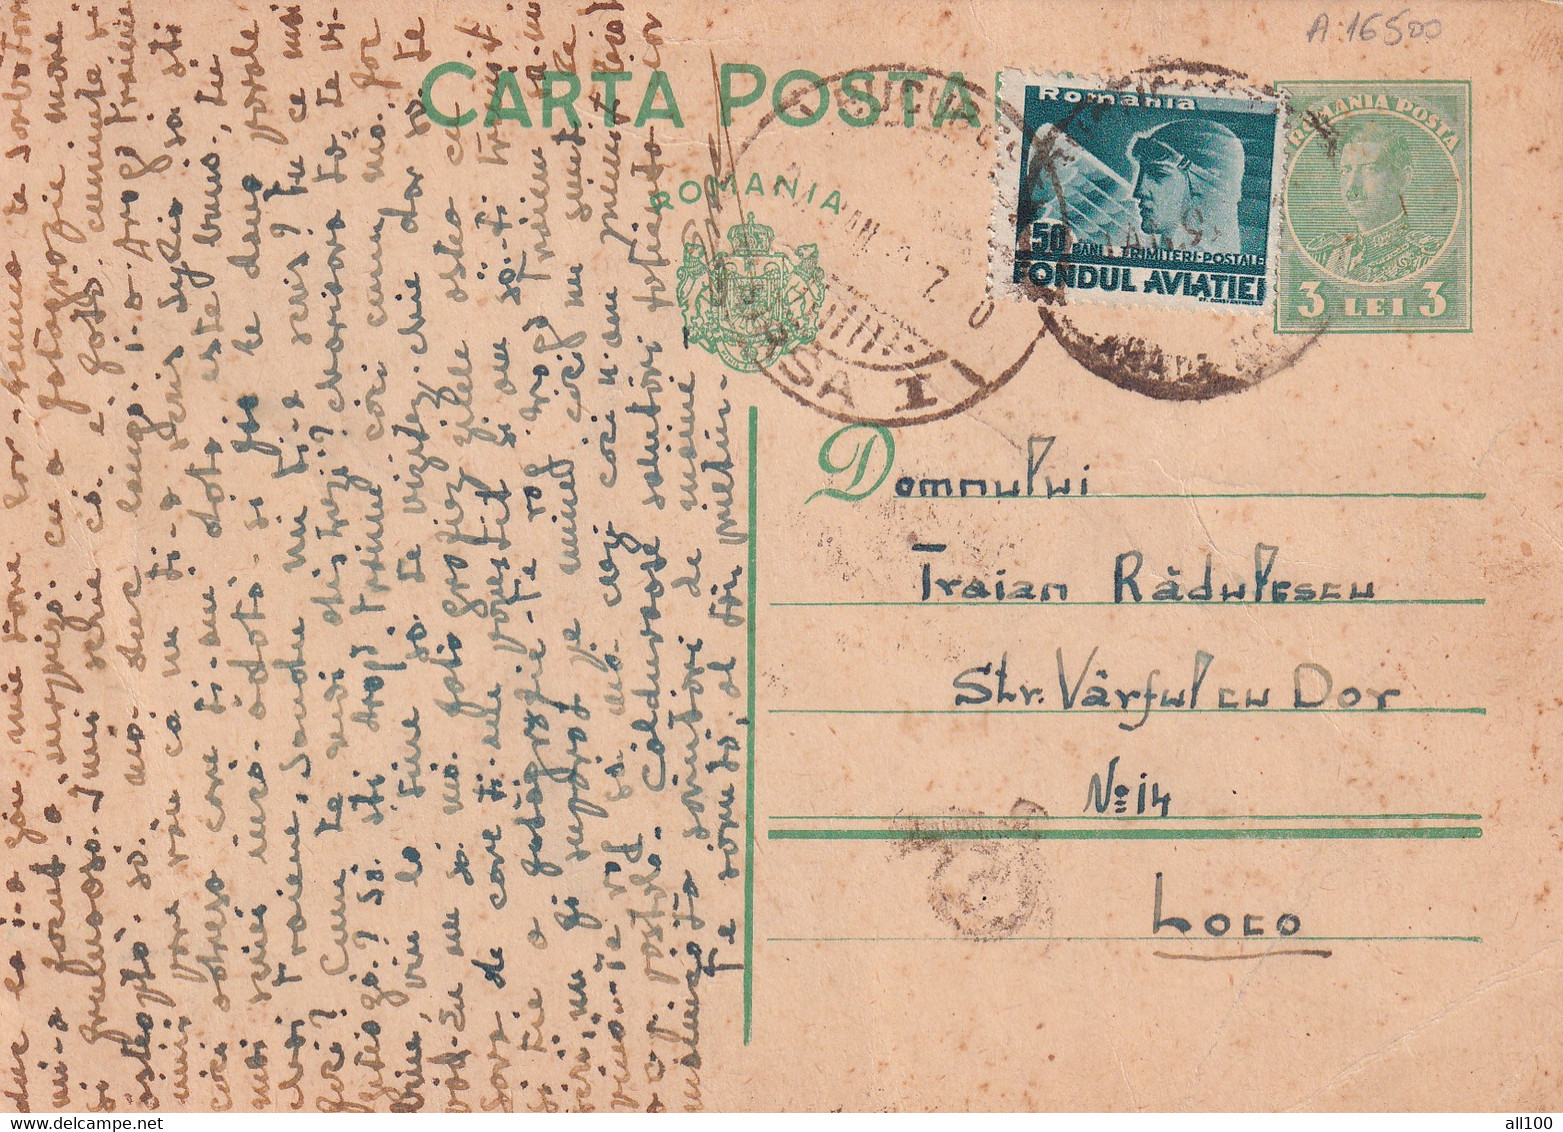 A 16502 - CARTA POSTALA 1932 FROM IASI TO BUCHAREST  KING MICHAEL 3LEI AVIATION STAMP - Briefe U. Dokumente